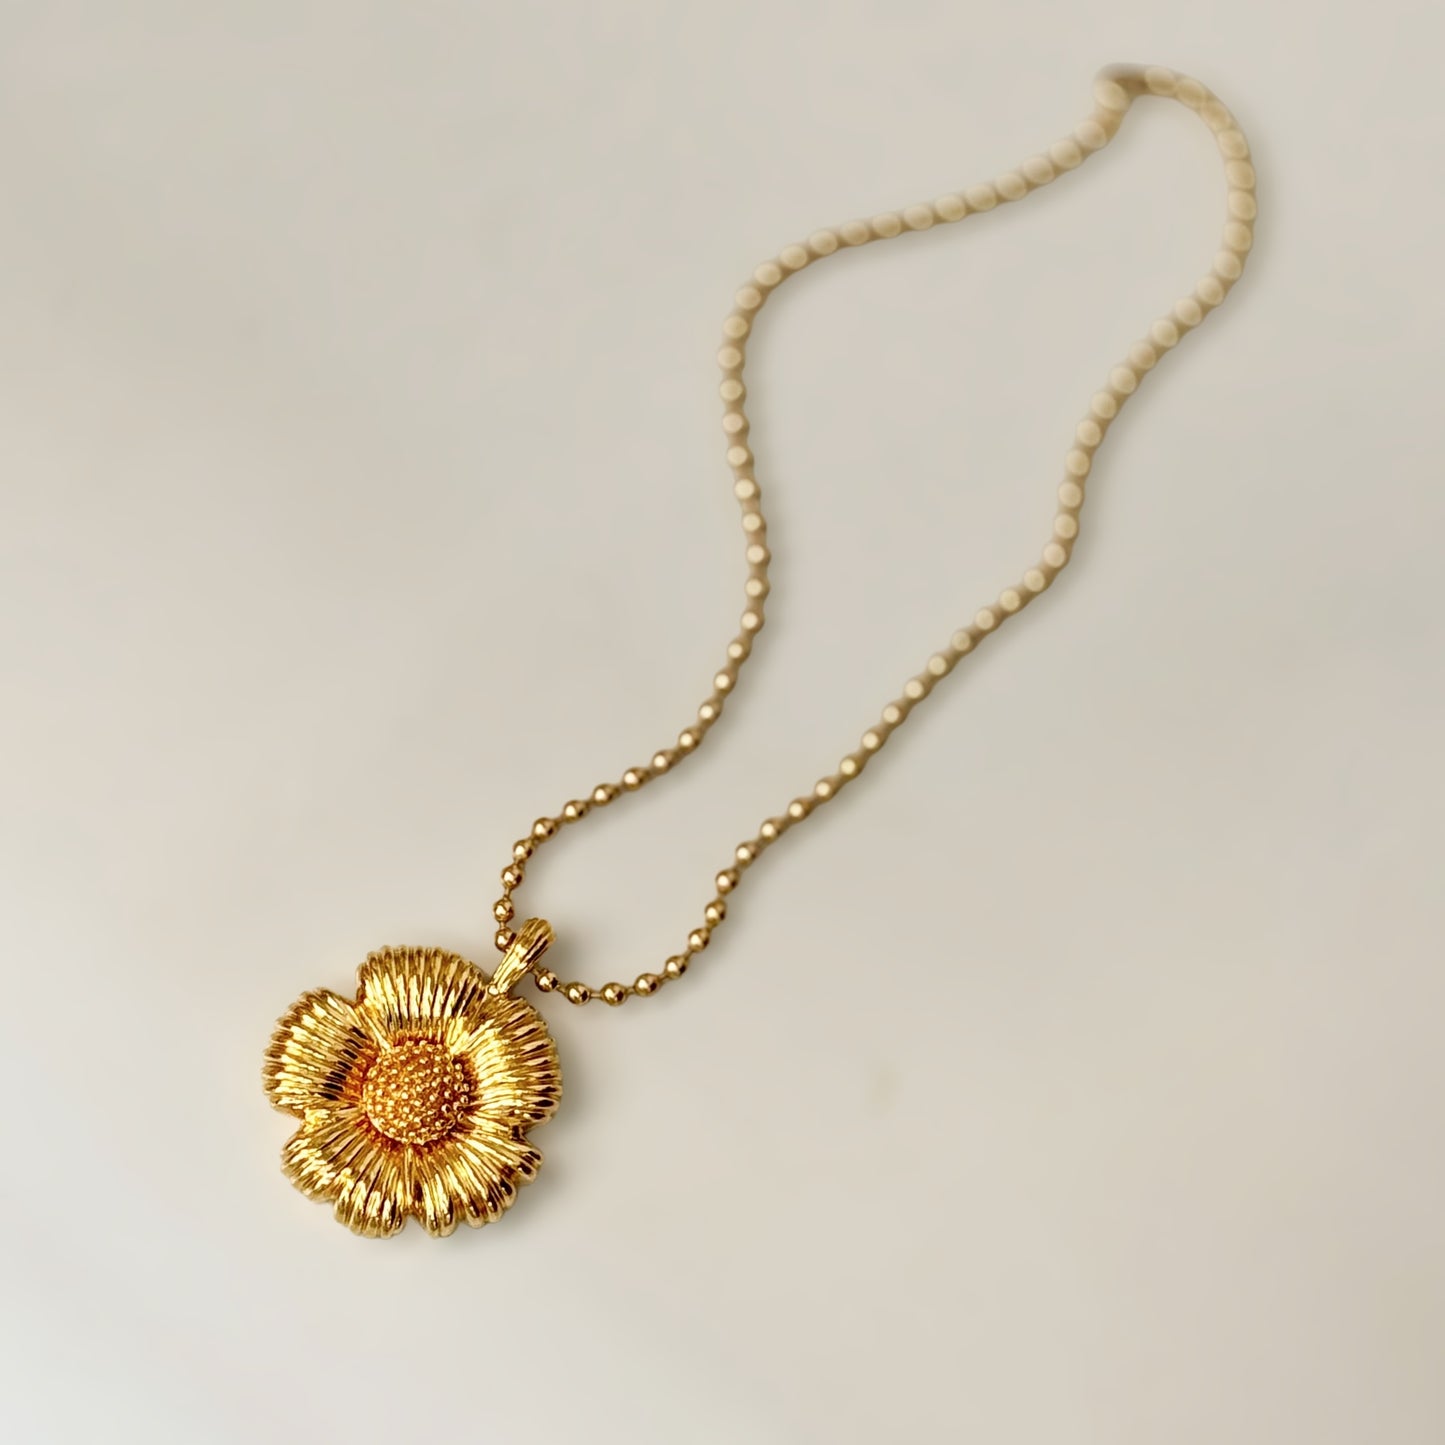 Adorable flower necklace